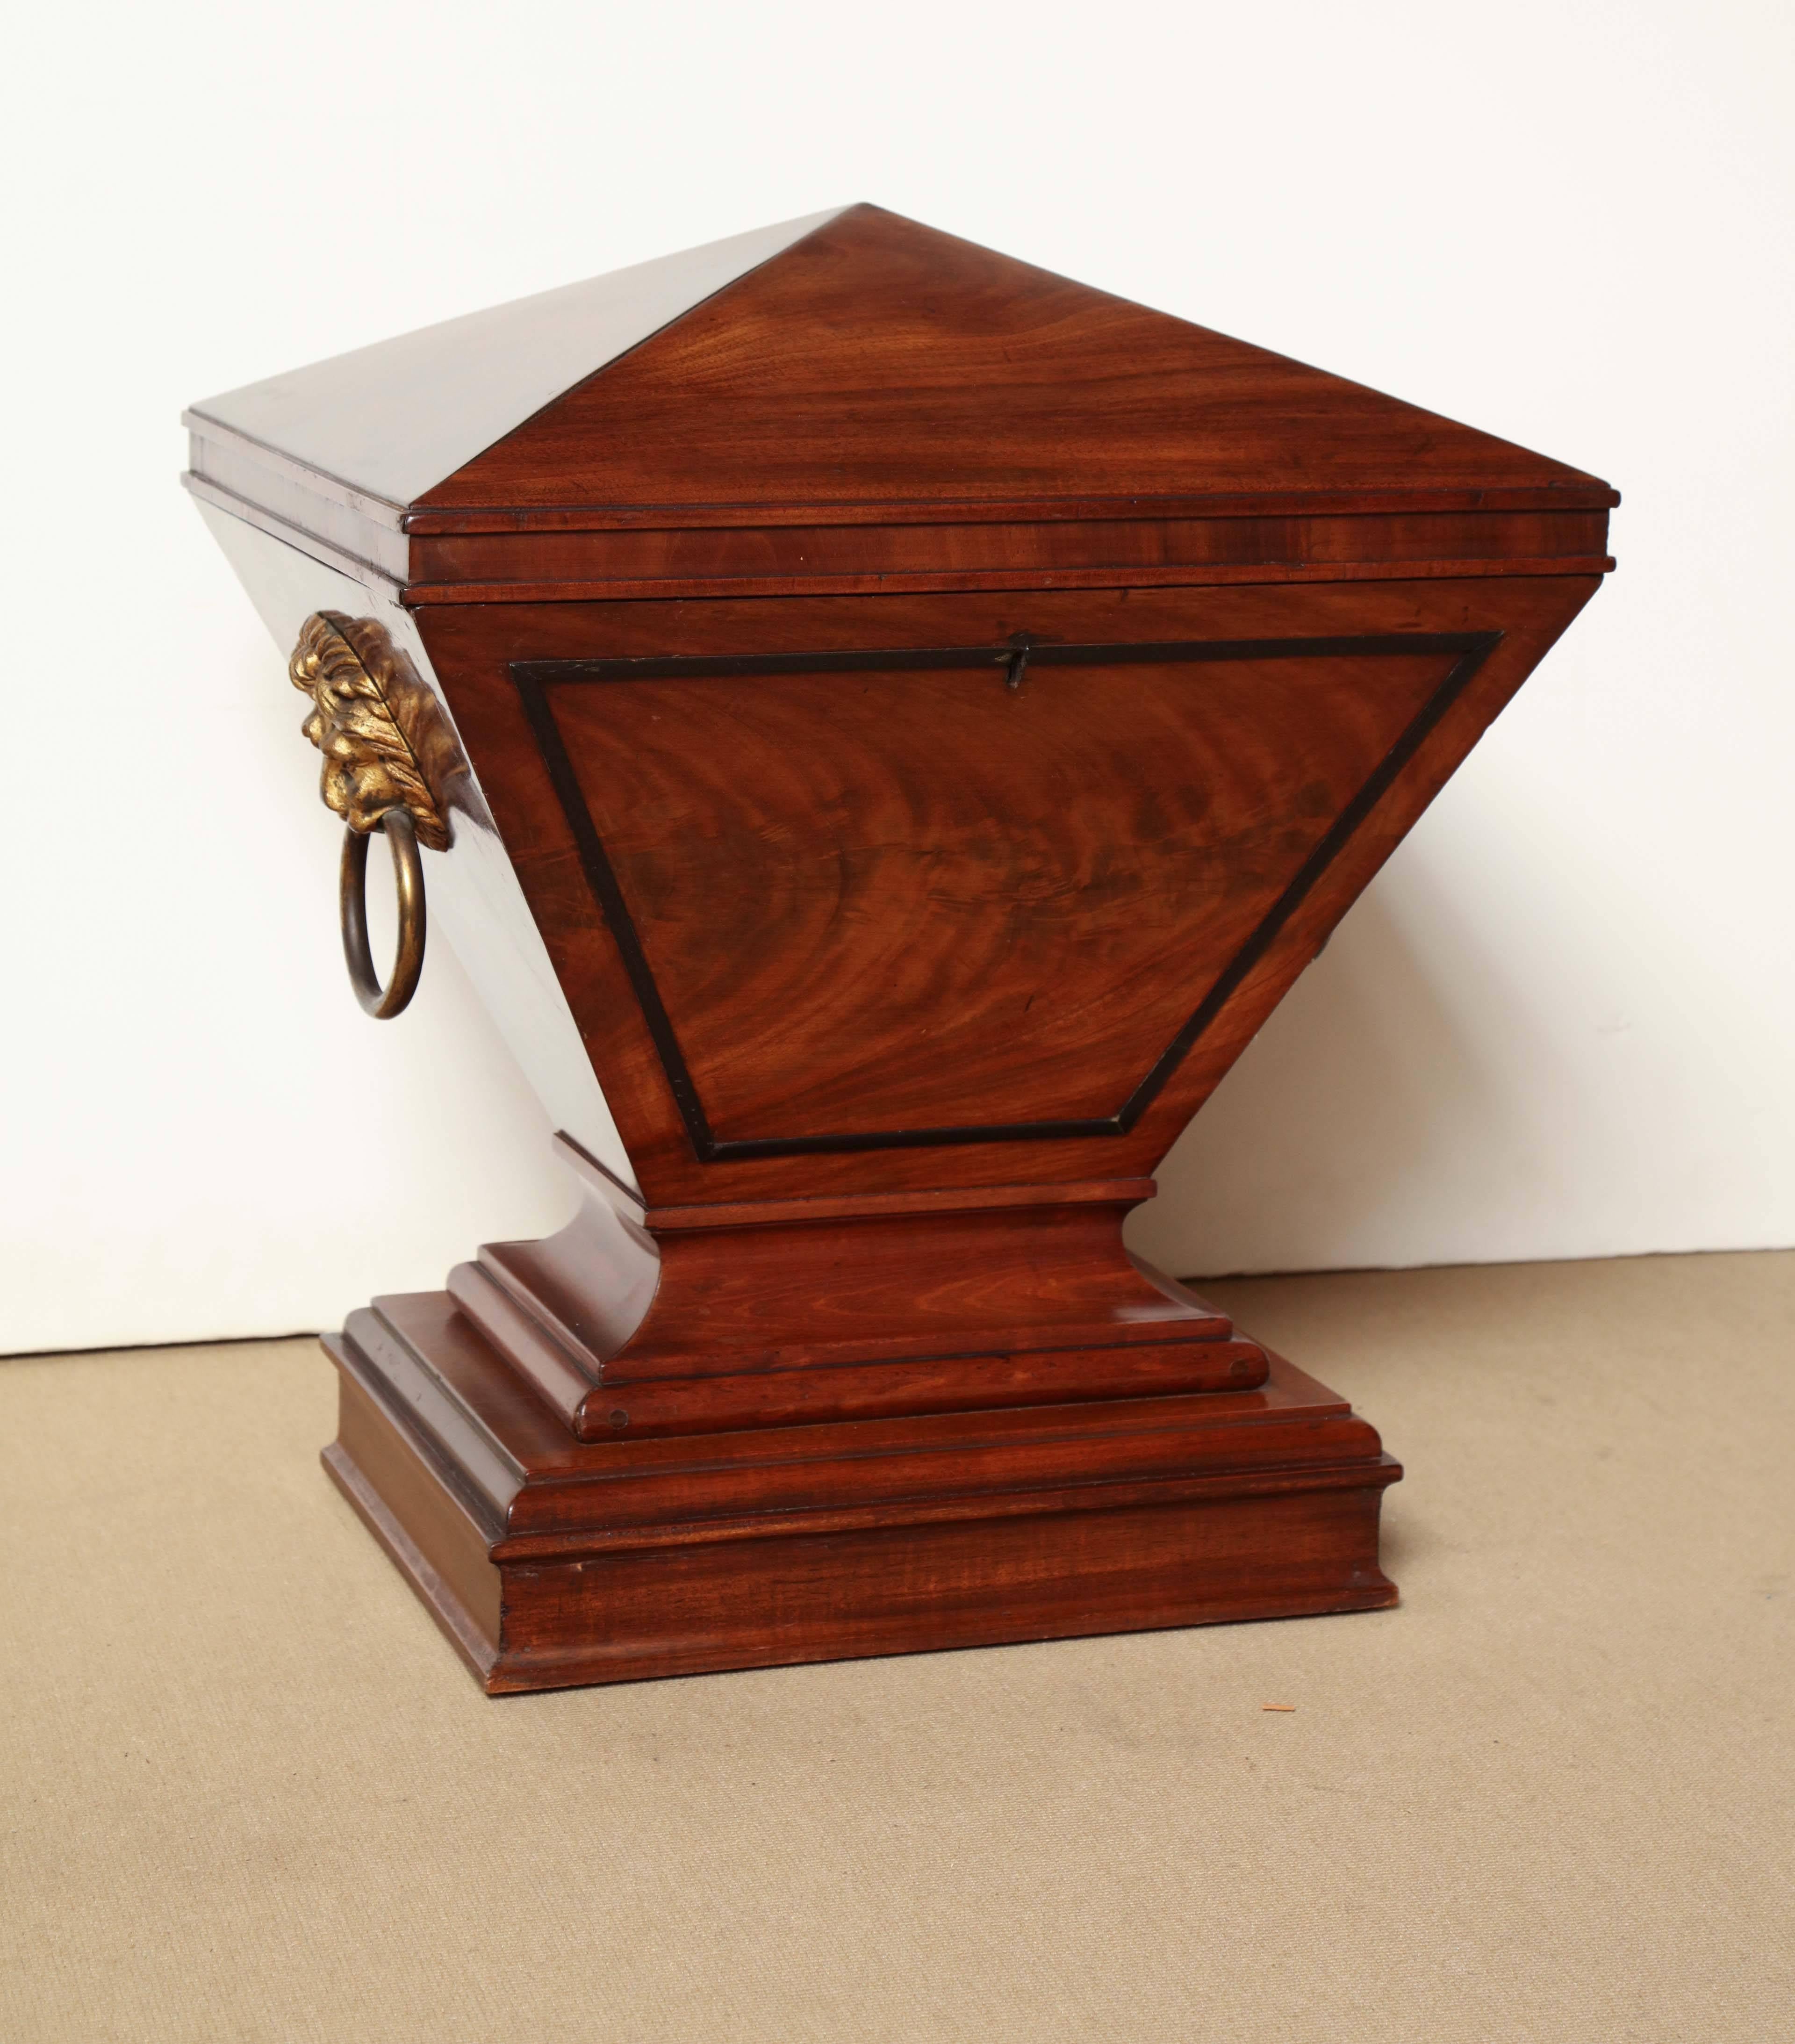 Early 19th century English Regency, mahogany and brass-mounted, cedar lined box.